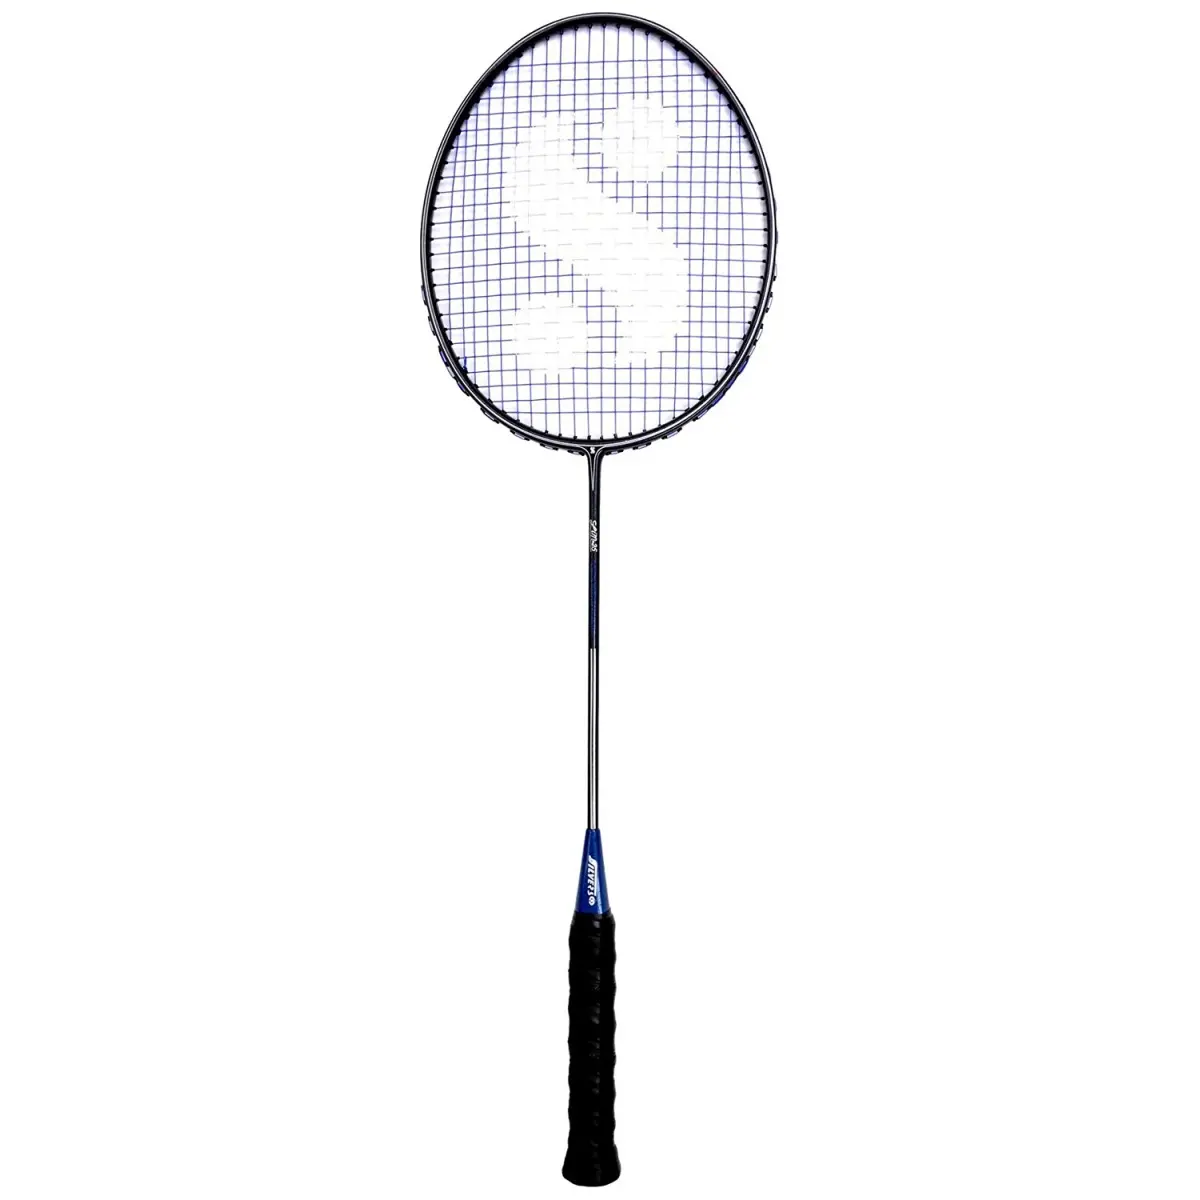 Silvers Lim 25 Badminton Racket Lowest Price